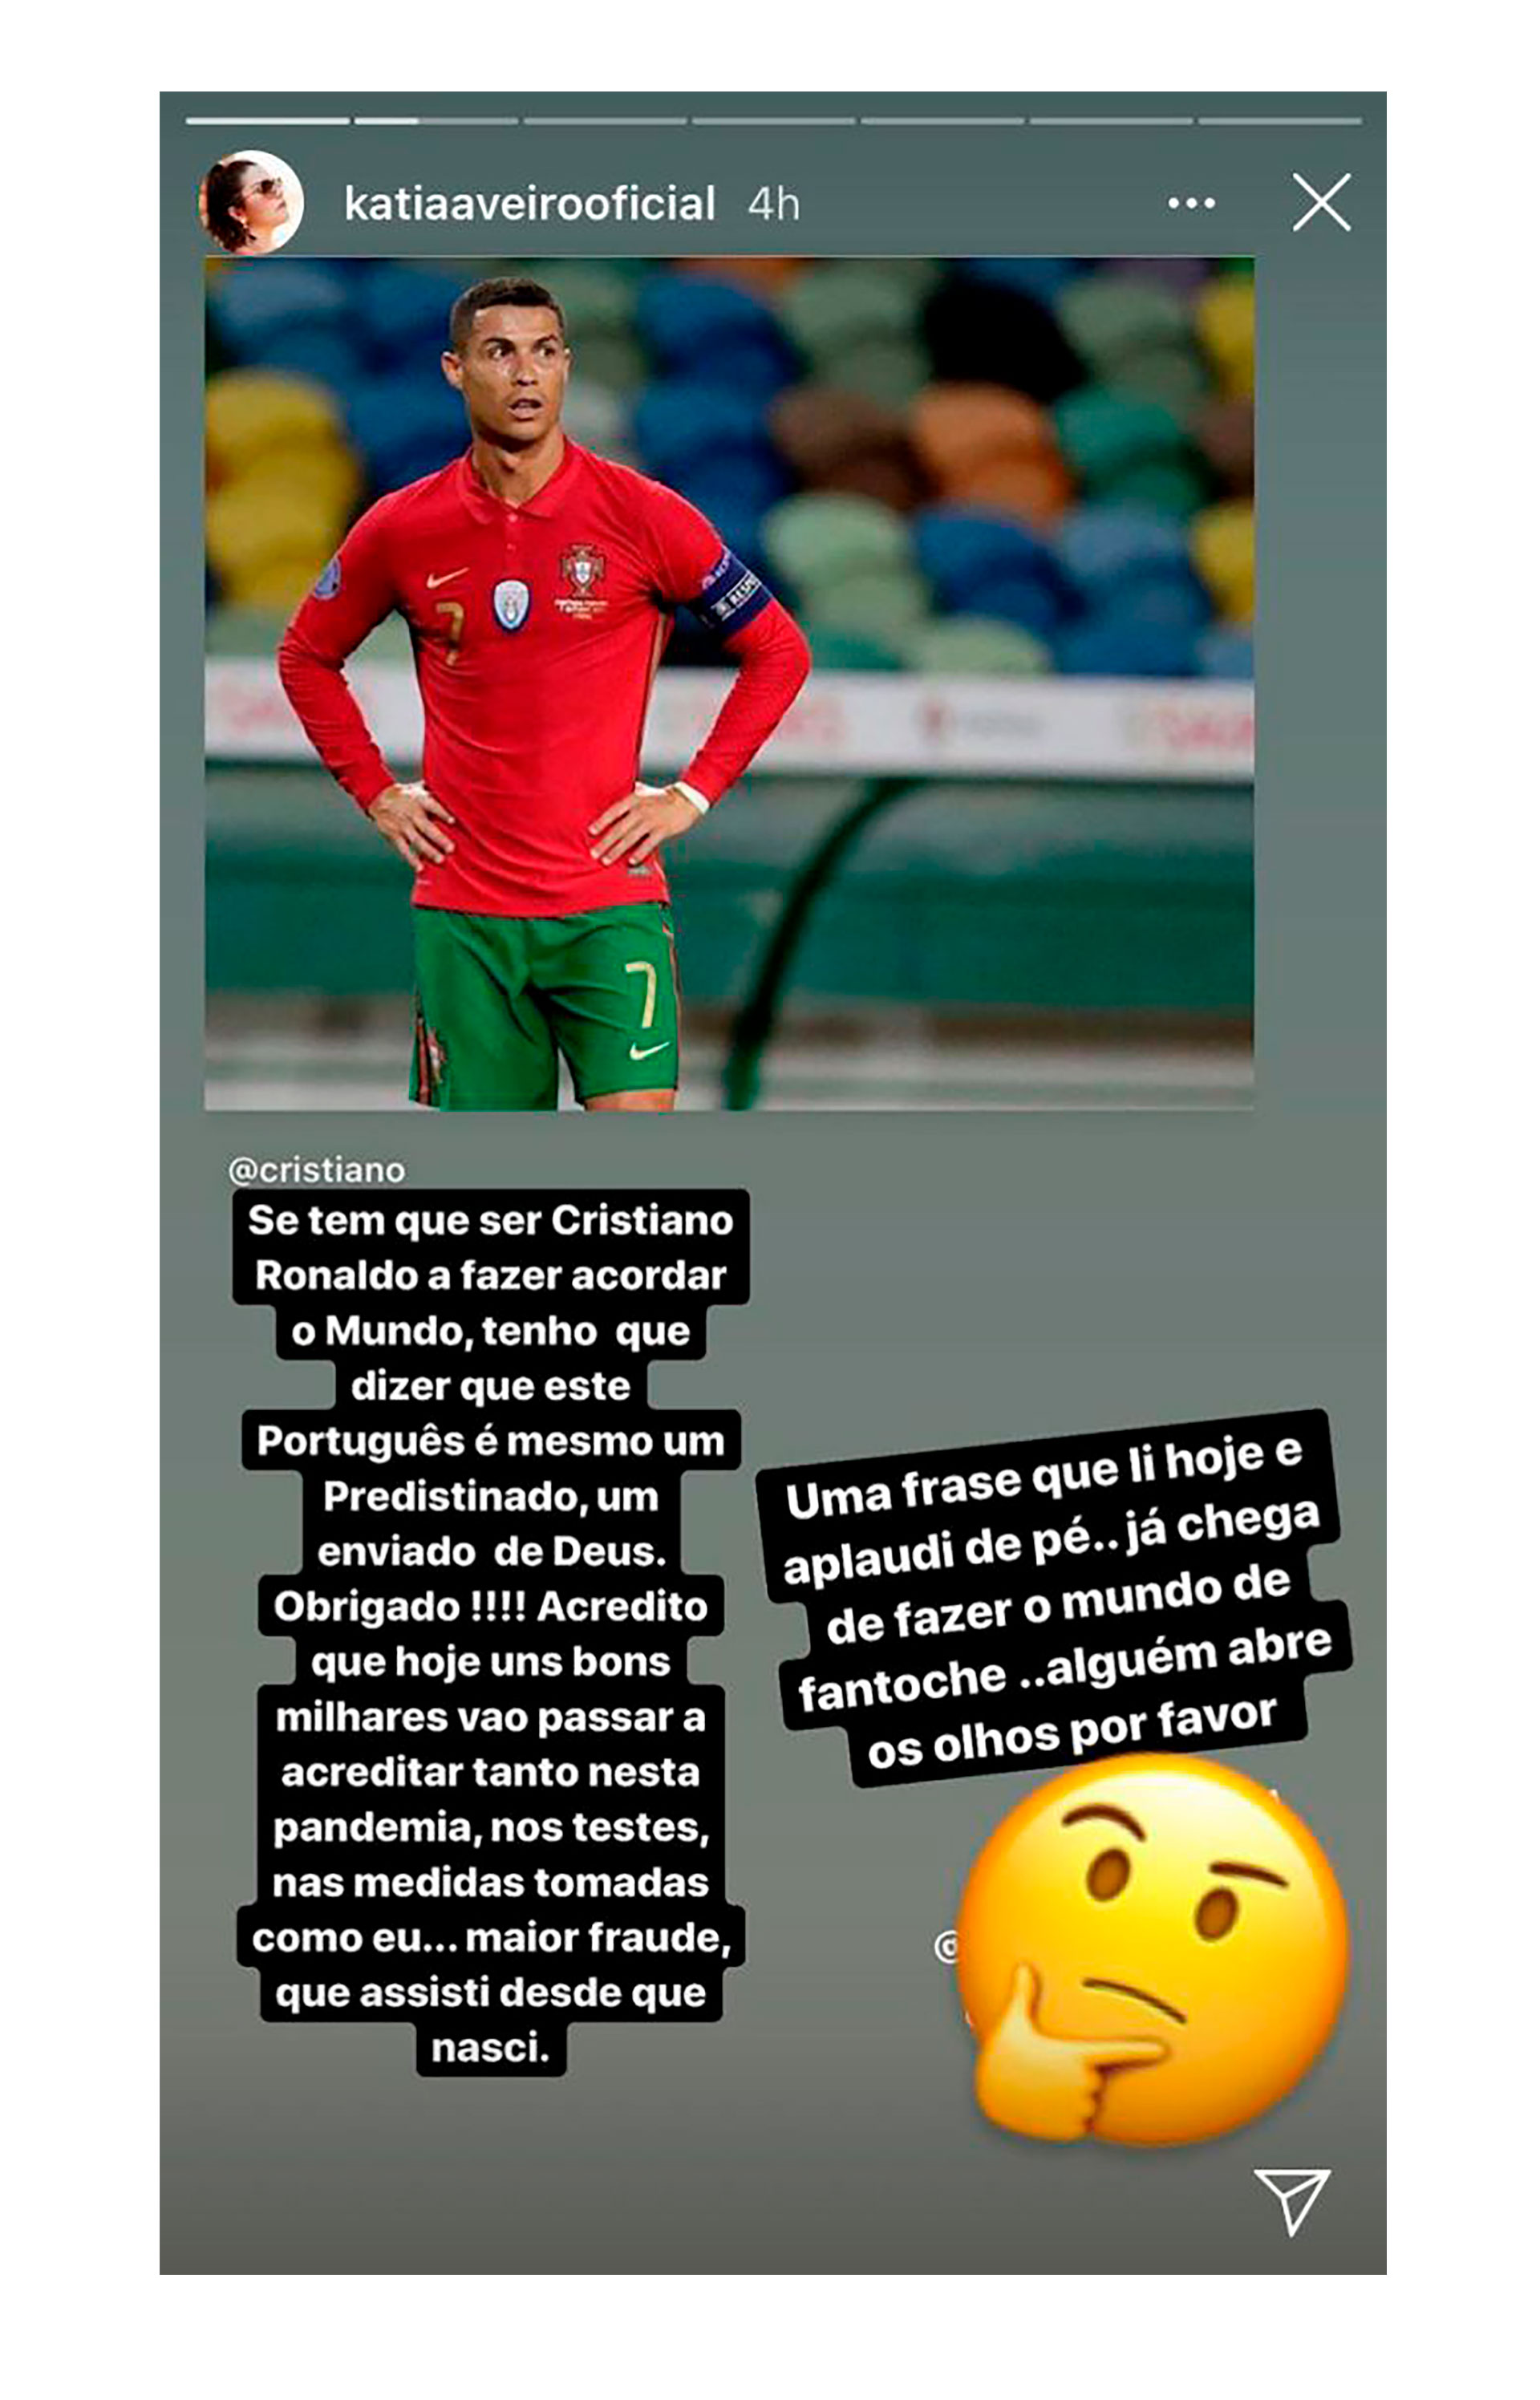 El polémico mensaje de Katia Aveiro, hermana de Cristiano Ronaldo